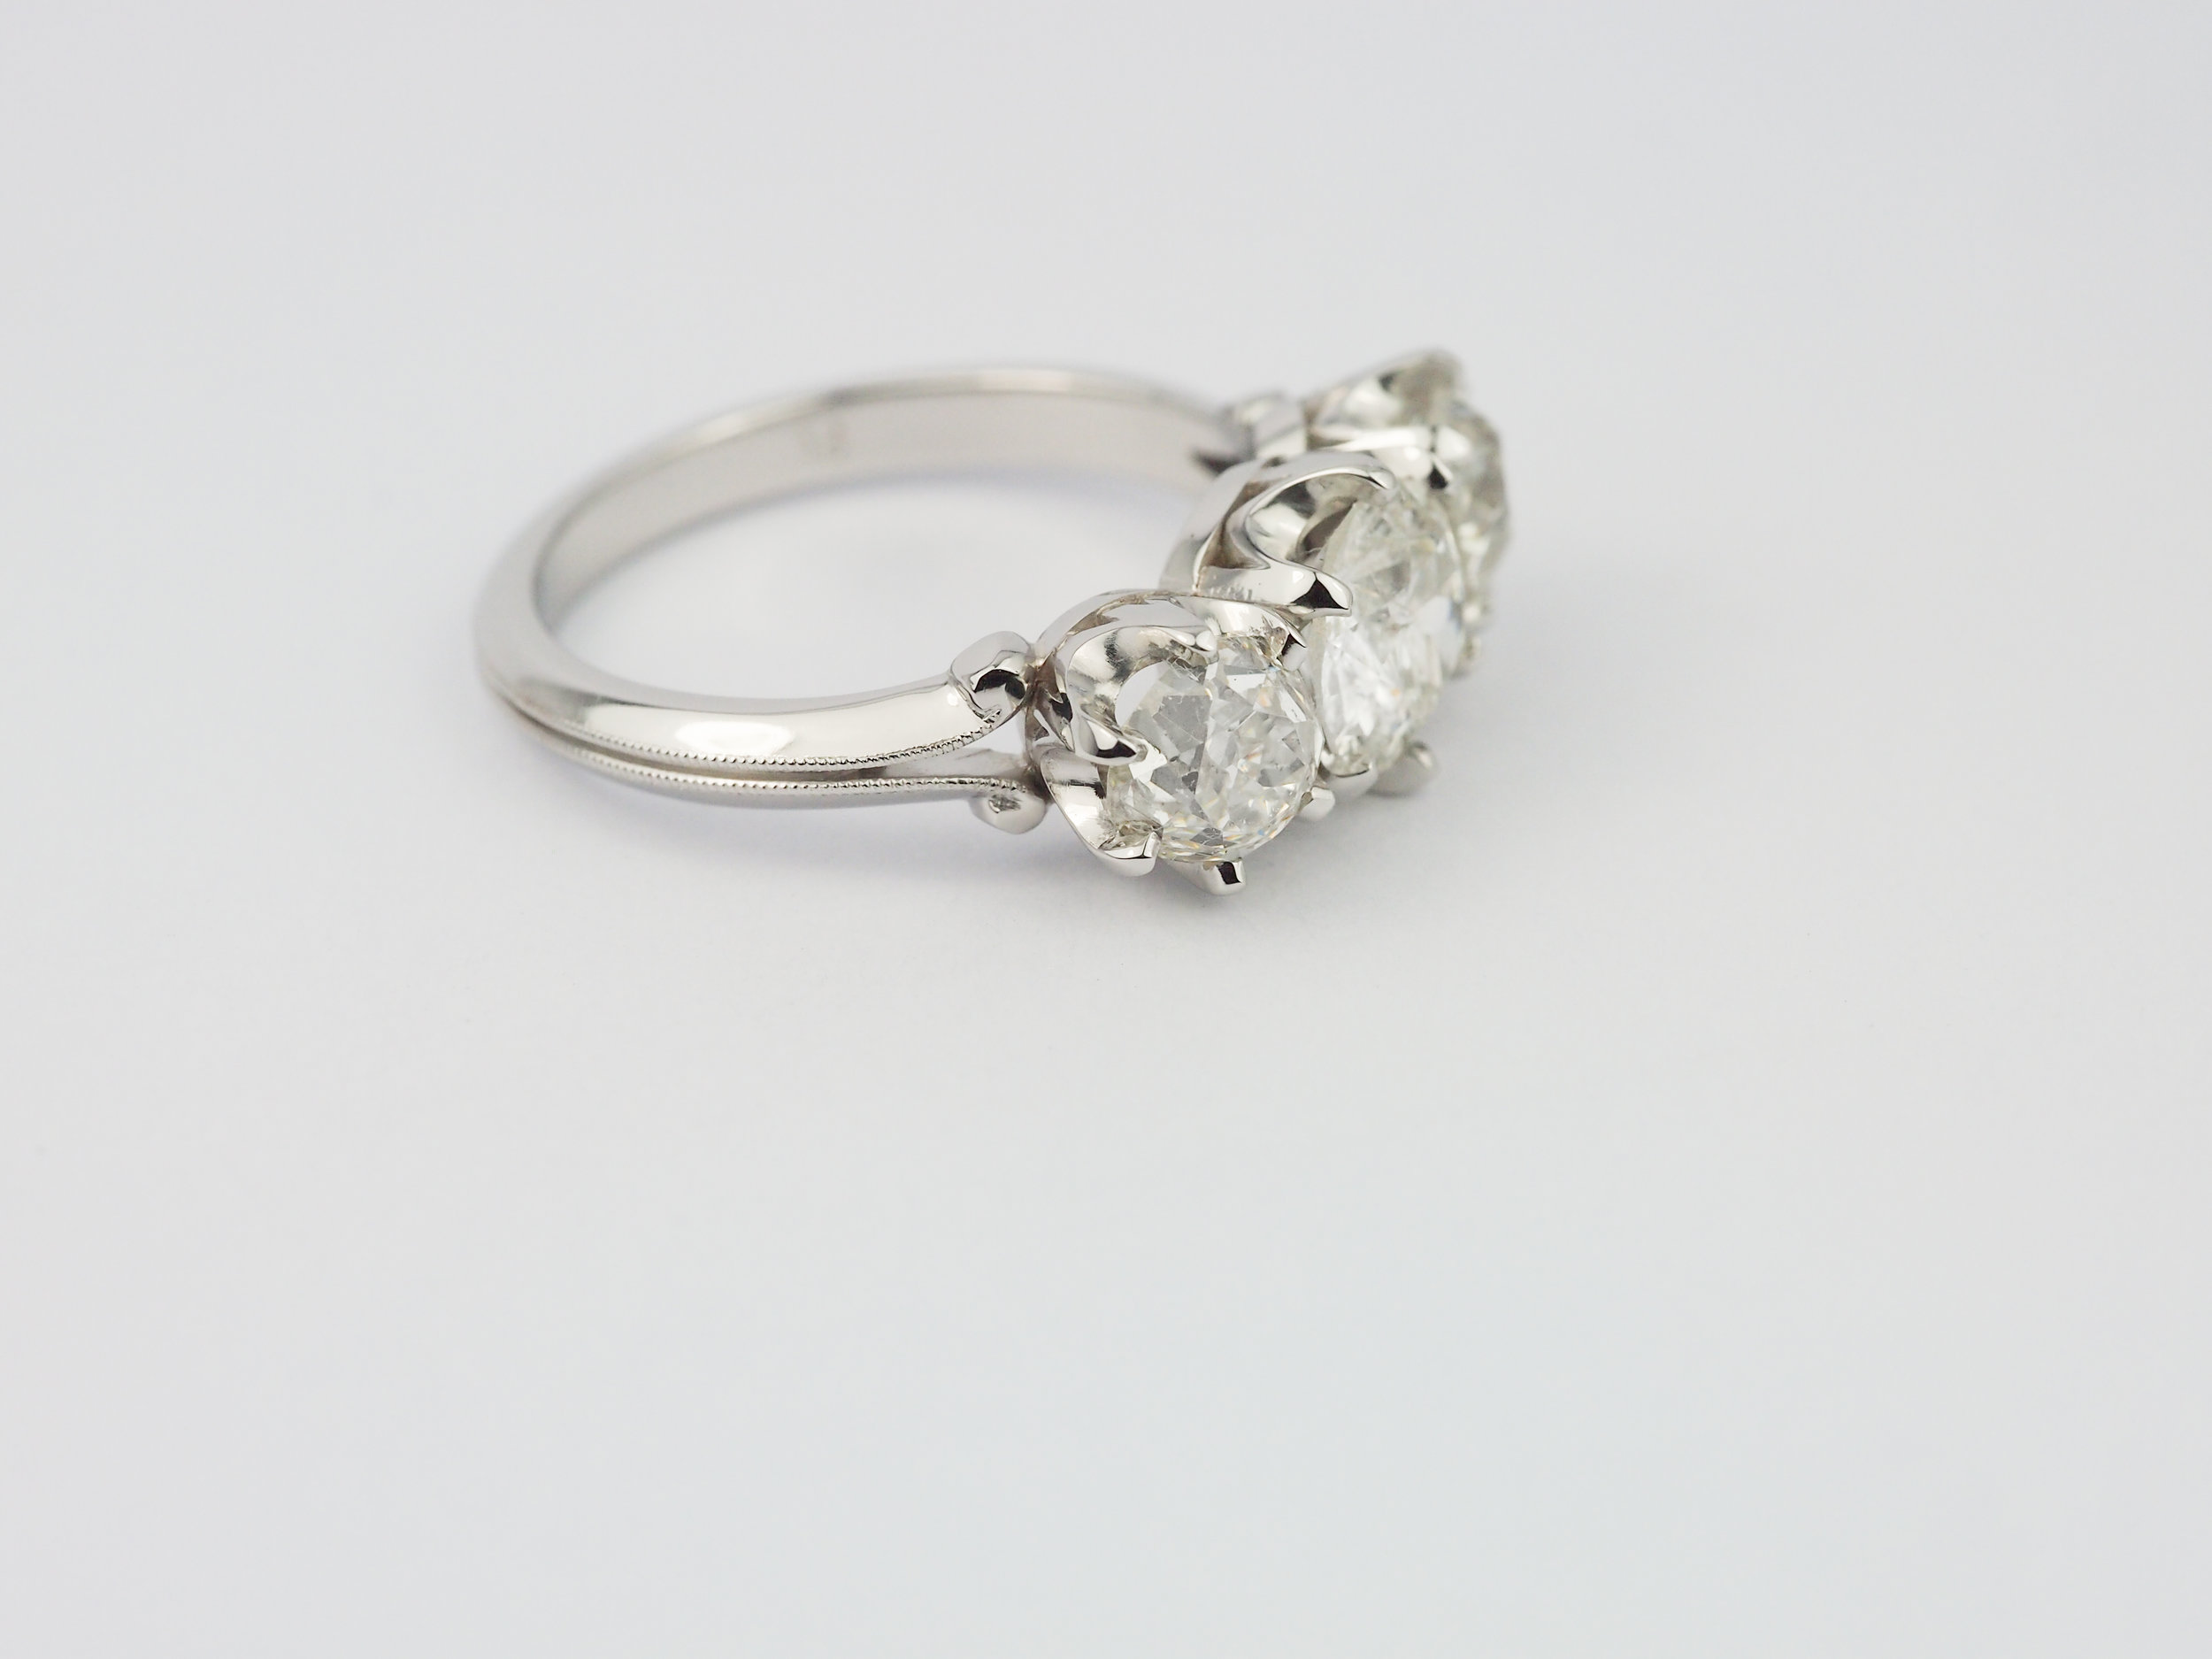  Old cut diamond three stone platinum engagement ring 